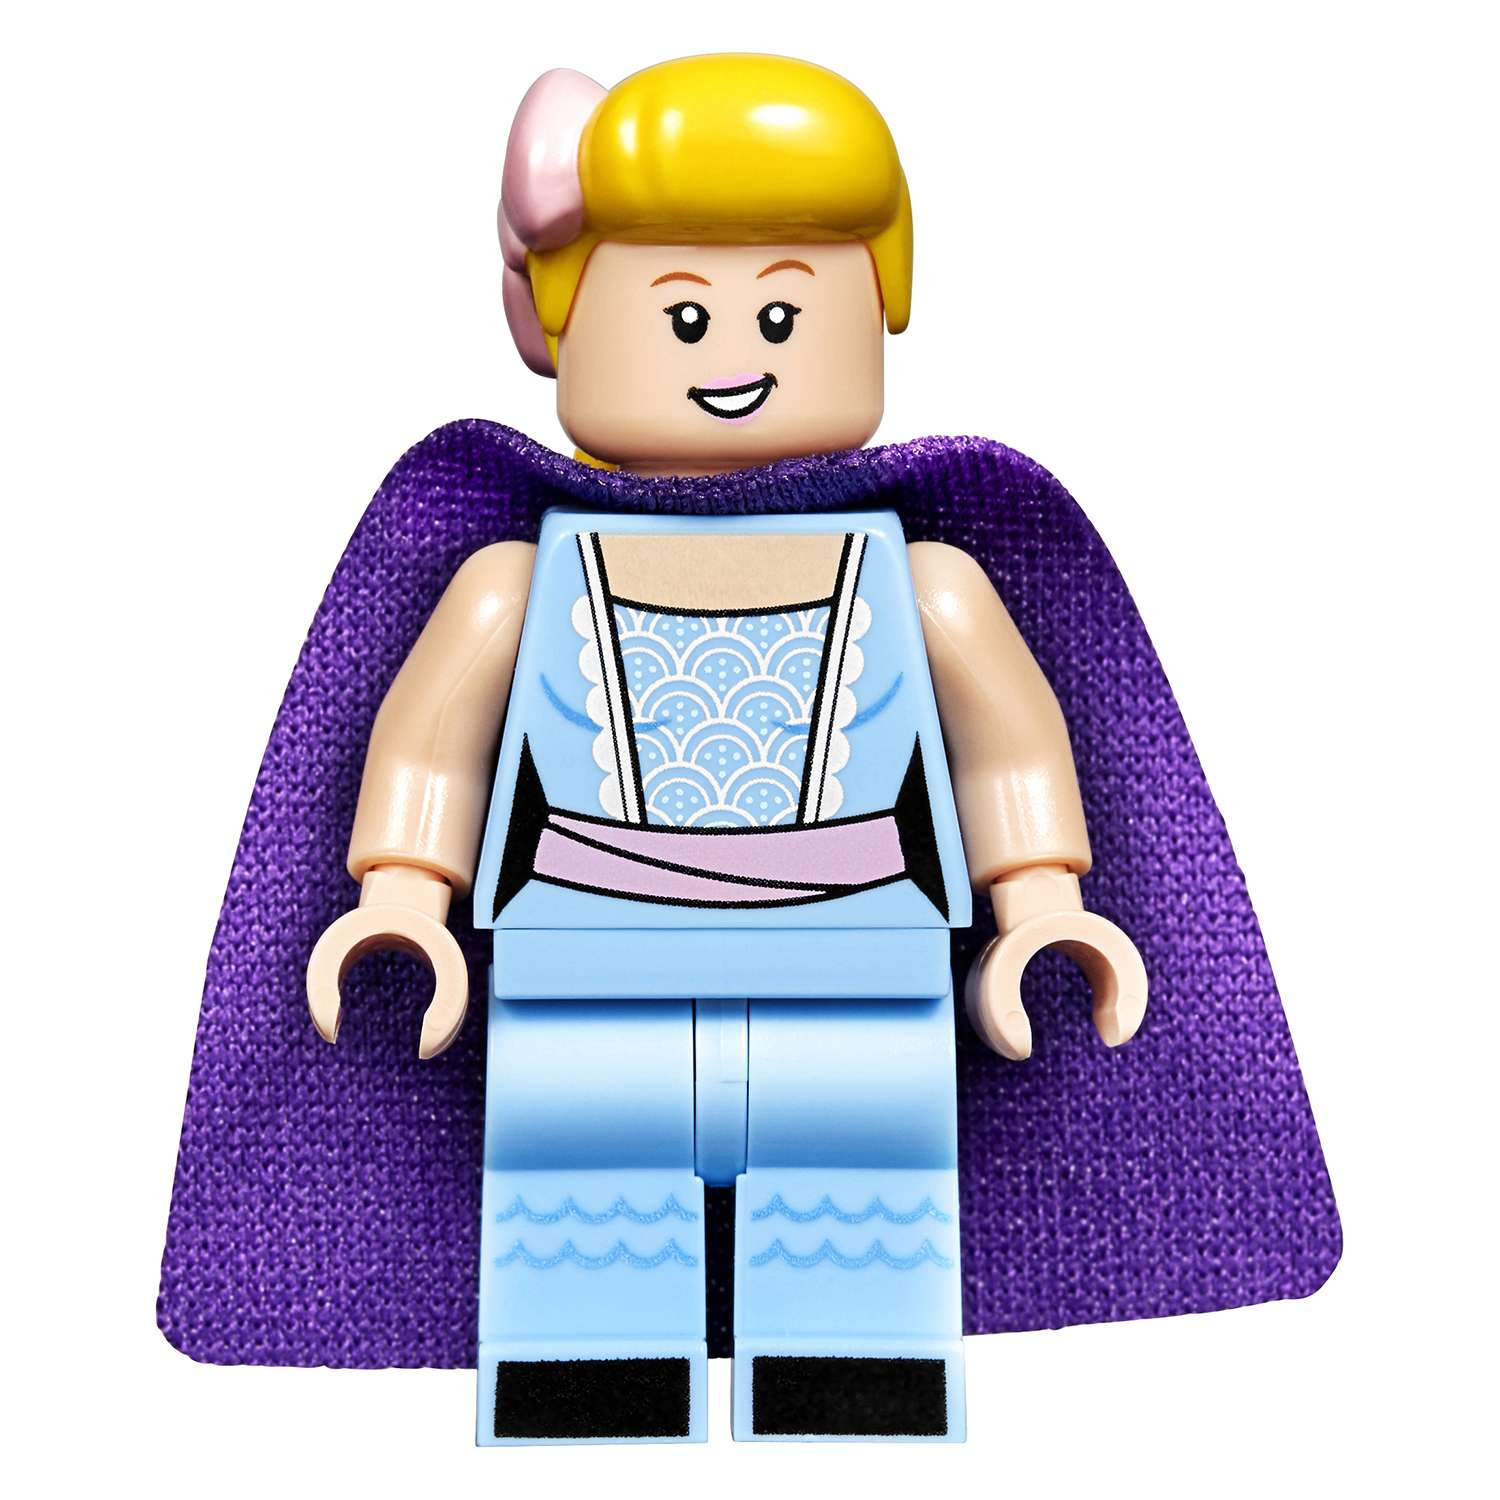 Конструктор LEGO 4+ Приключения Базза и Бо Пип на детской площадке 10768 - фото 18